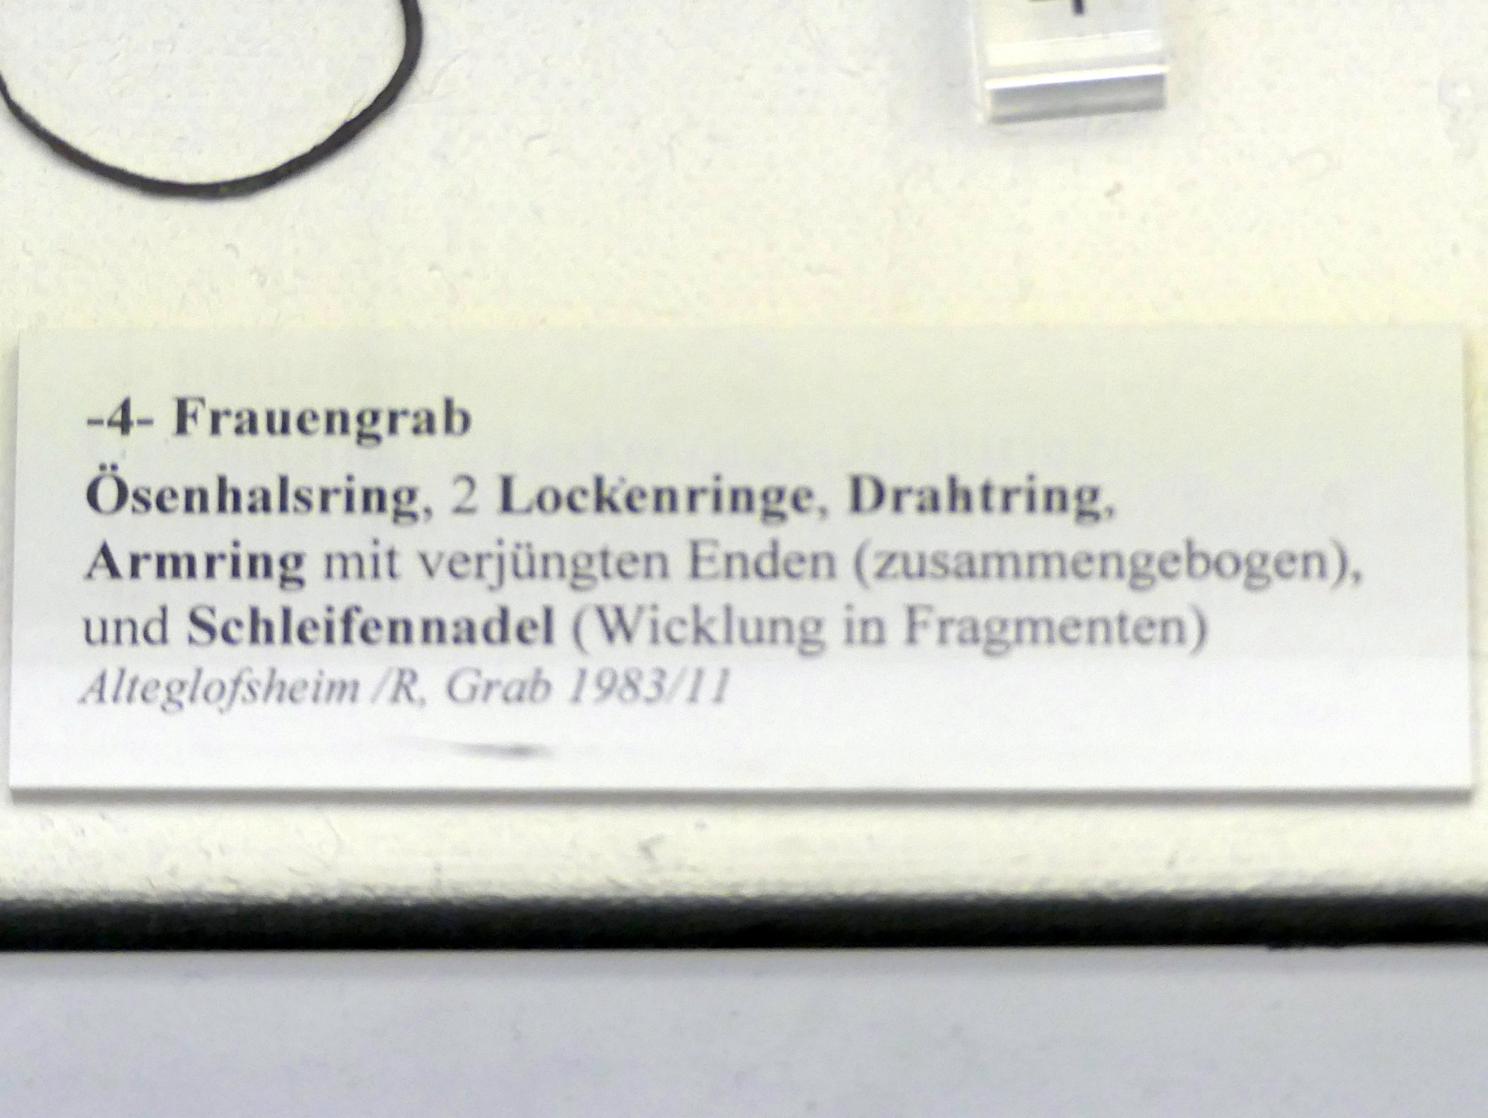 Ösenhalsring, Frühe Bronzezeit, 3365 - 1200 v. Chr., Bild 2/2